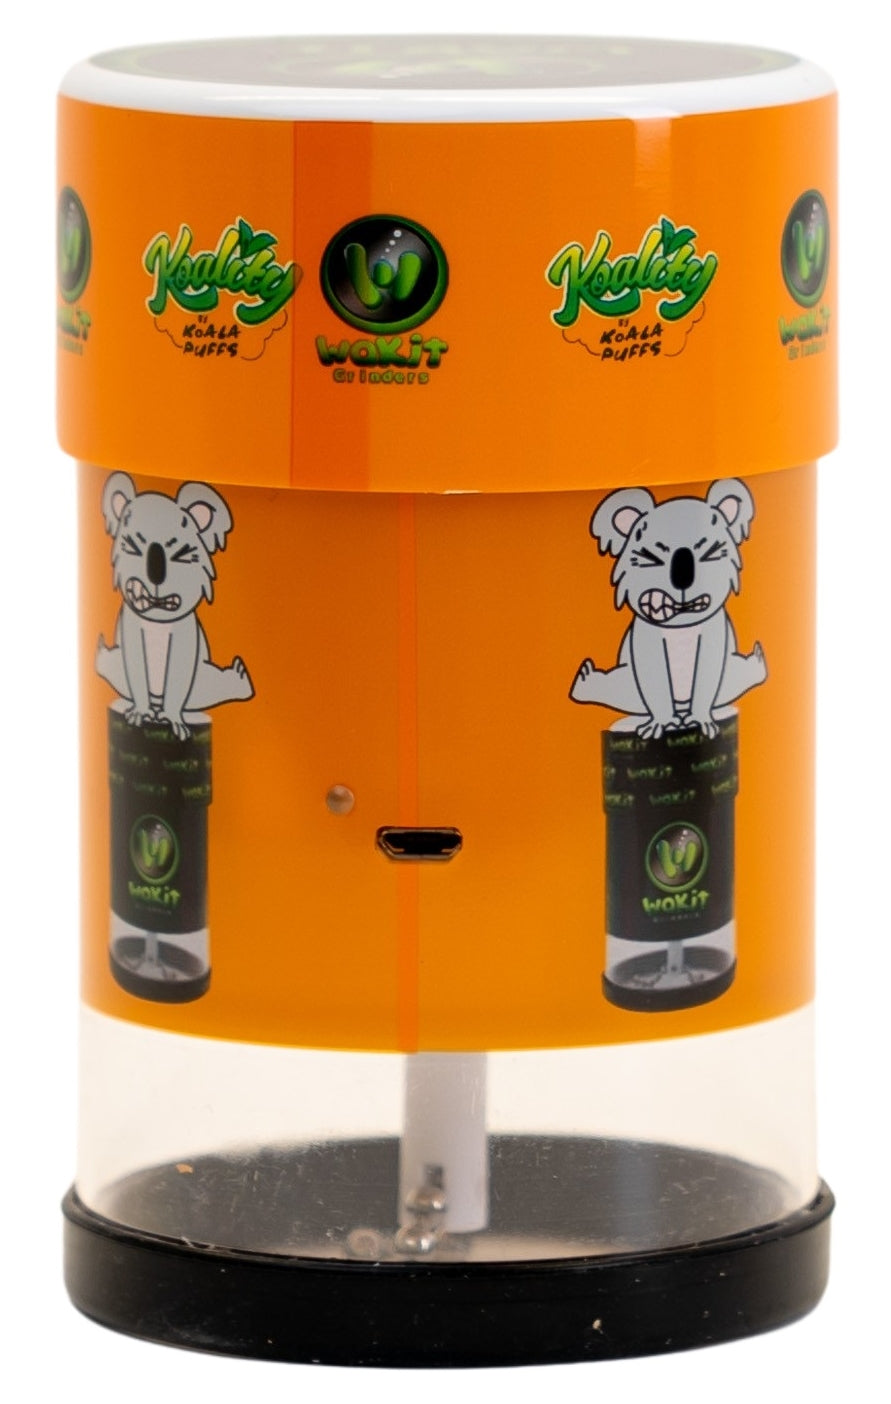 OCB x Wakit Electric Grinder - Koala Design